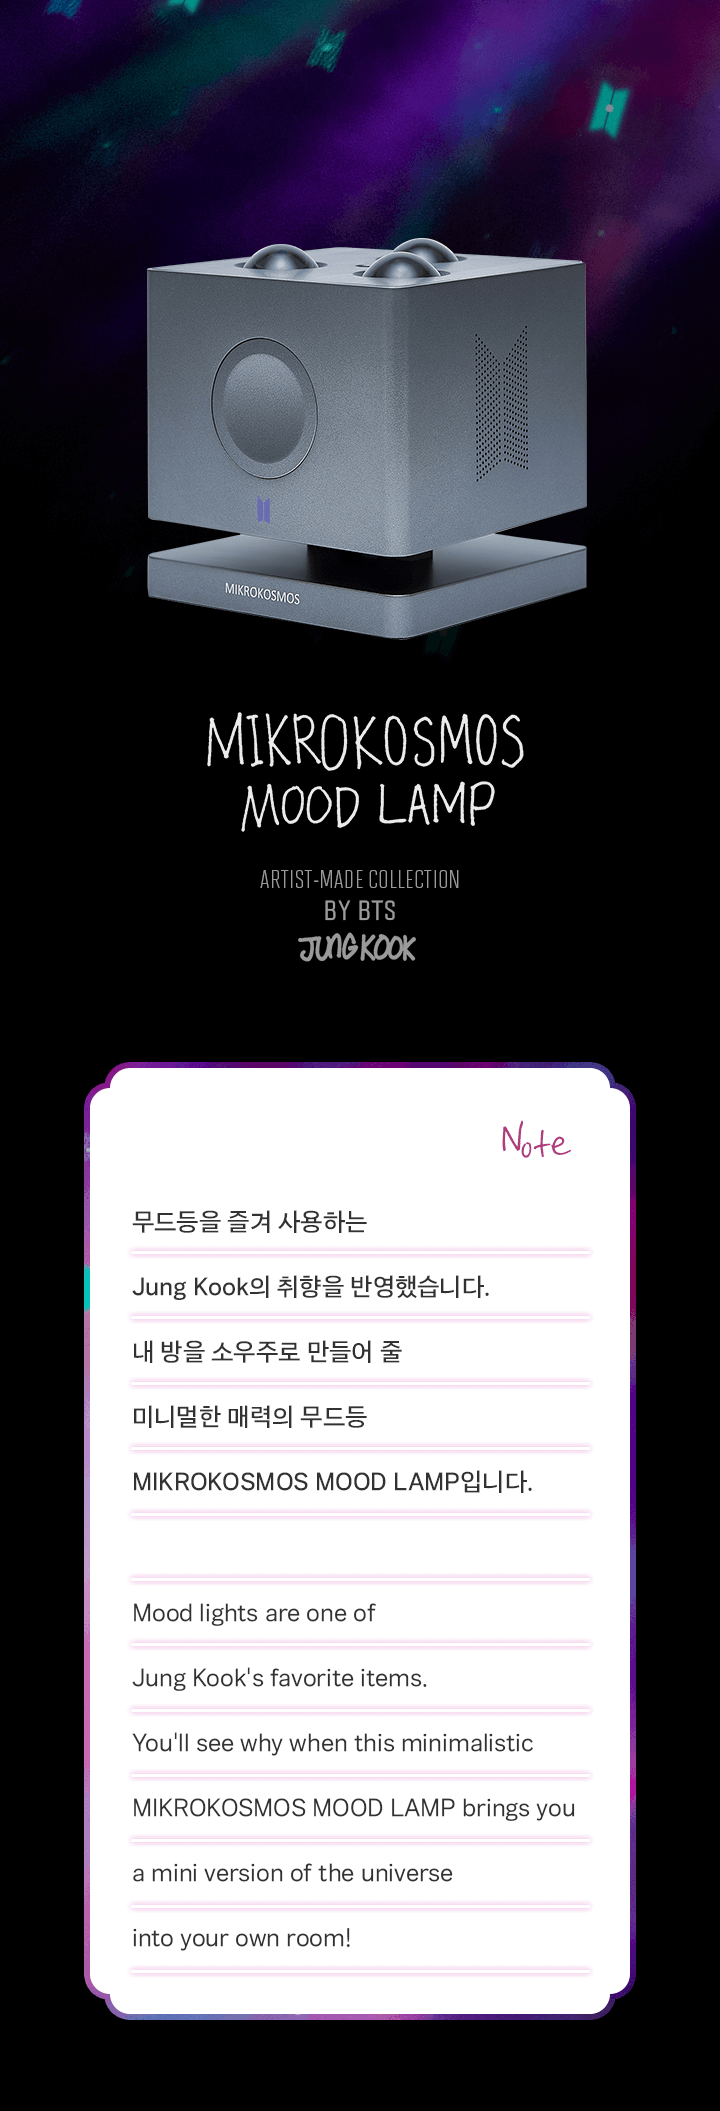 BTS ムードランプ MIKROKOSMOS MOOD LAMP グク - アイドル